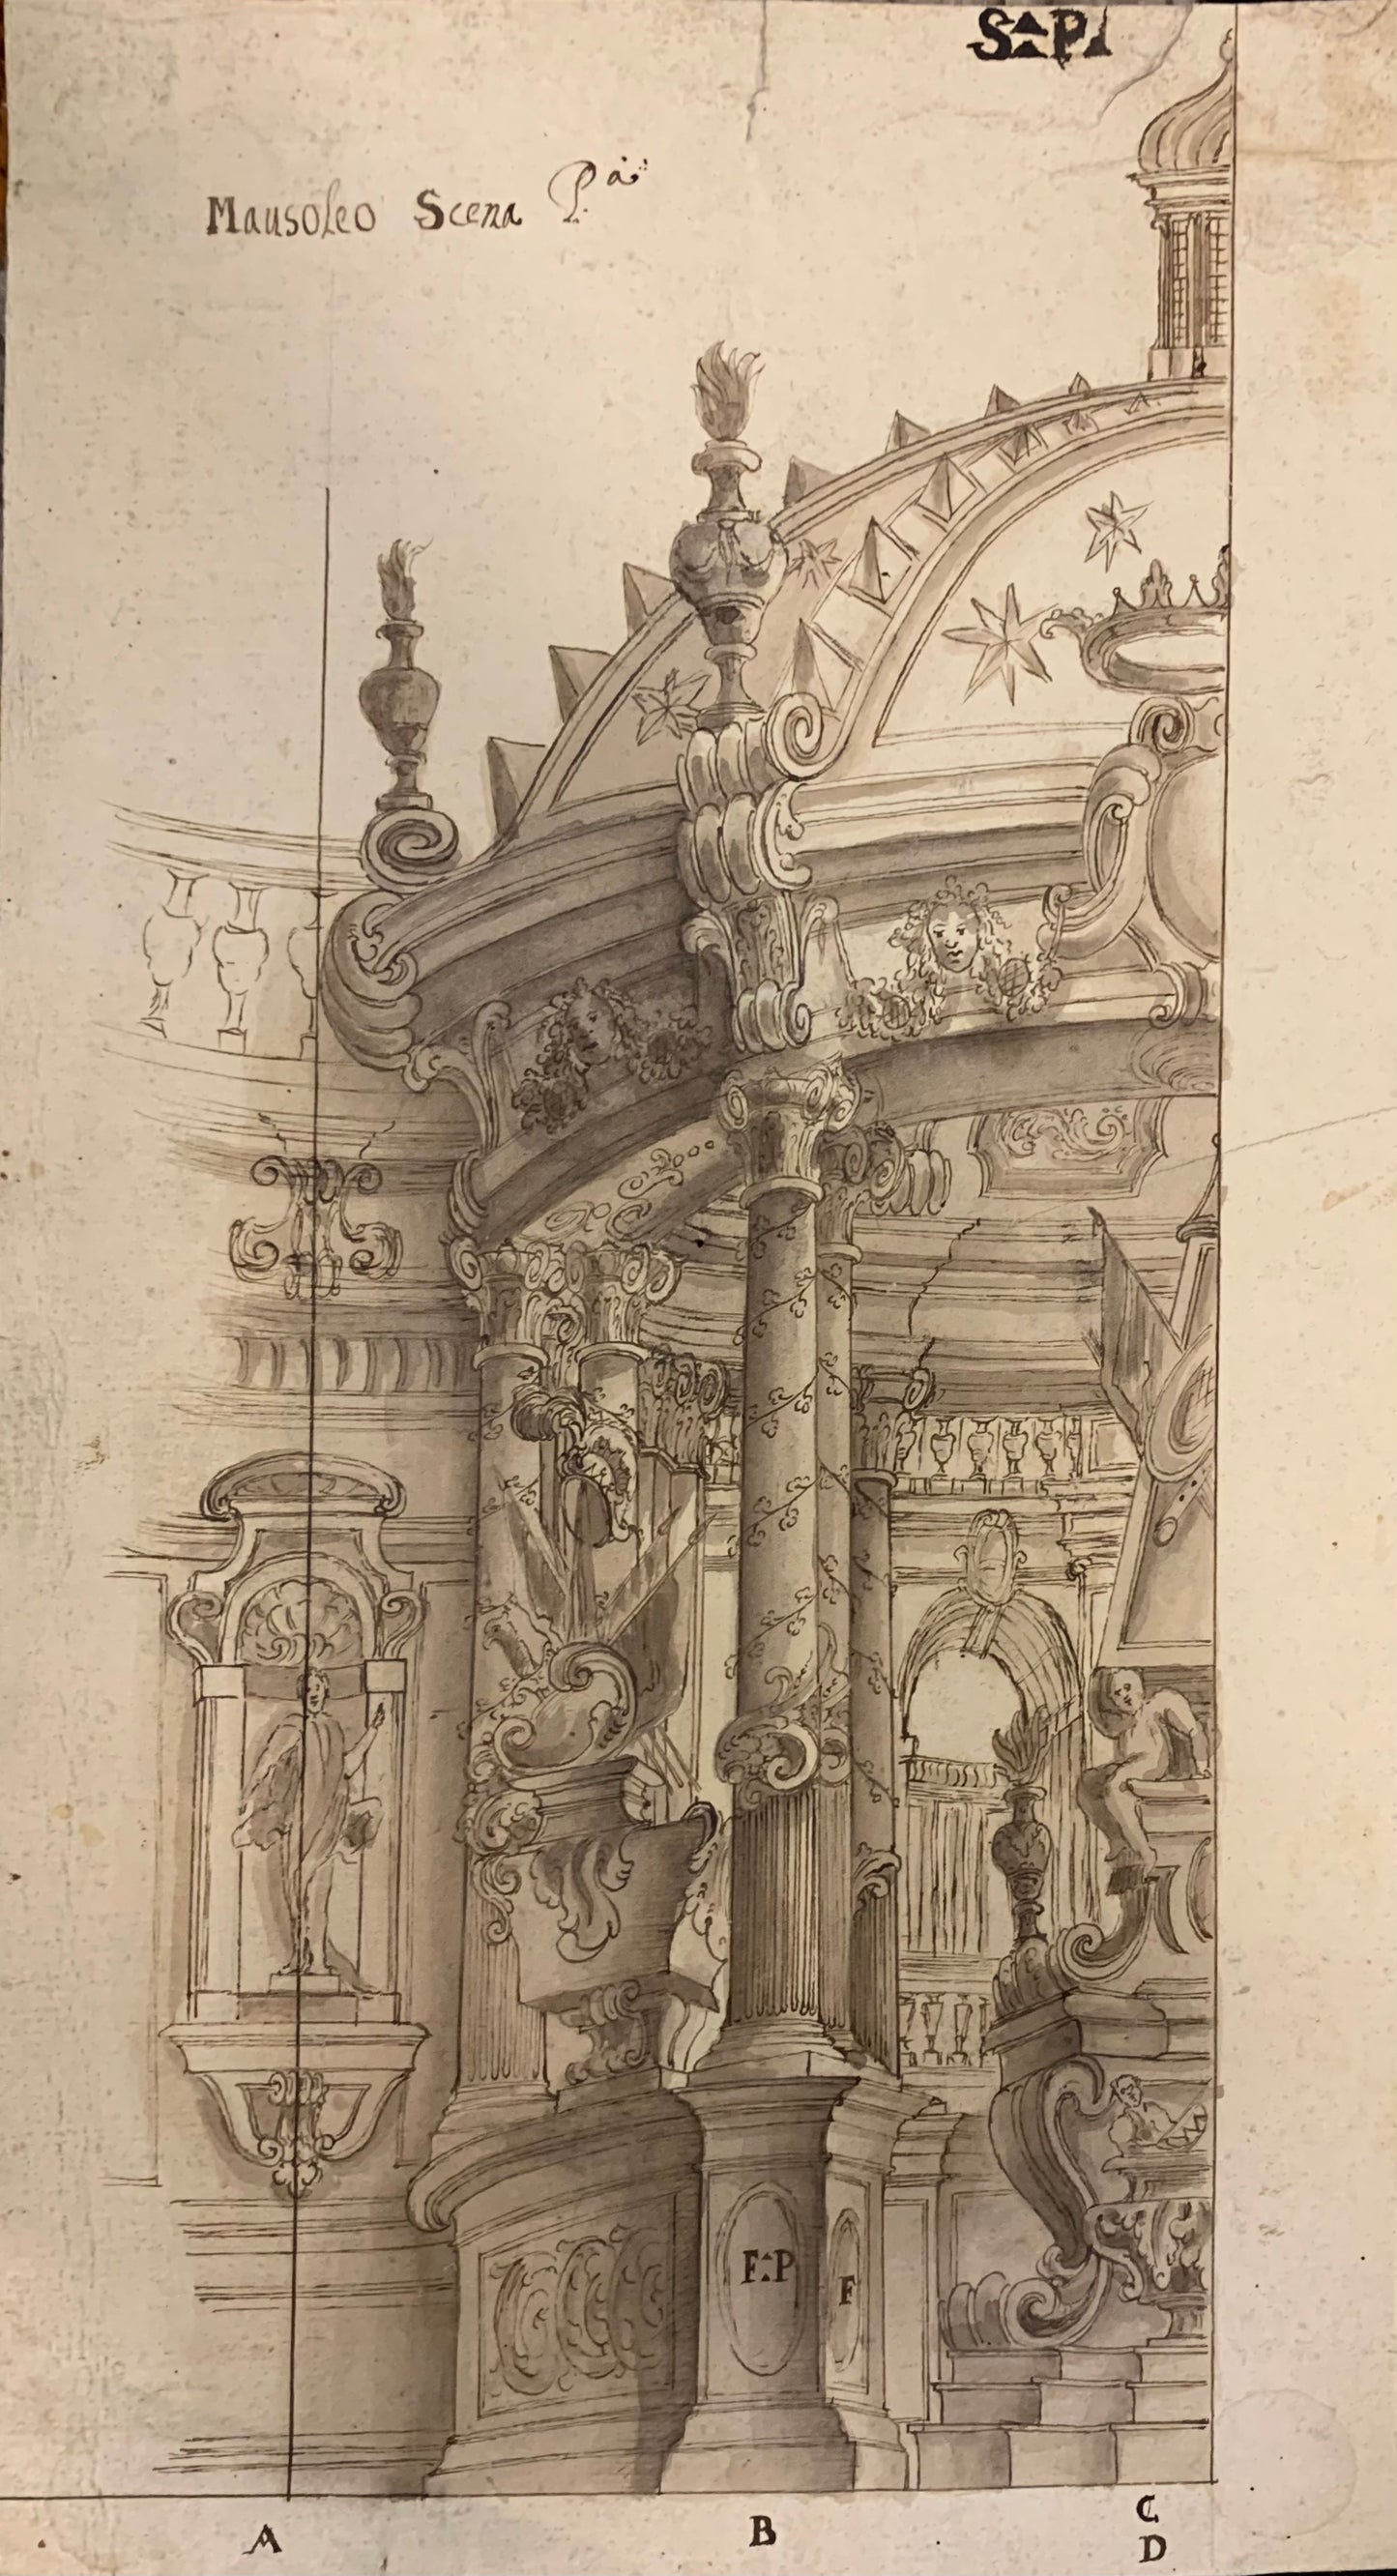 Theatrical scenography, Mausoleum Scena Prima. Entourage by Ferdinando Galli Bibbiena.